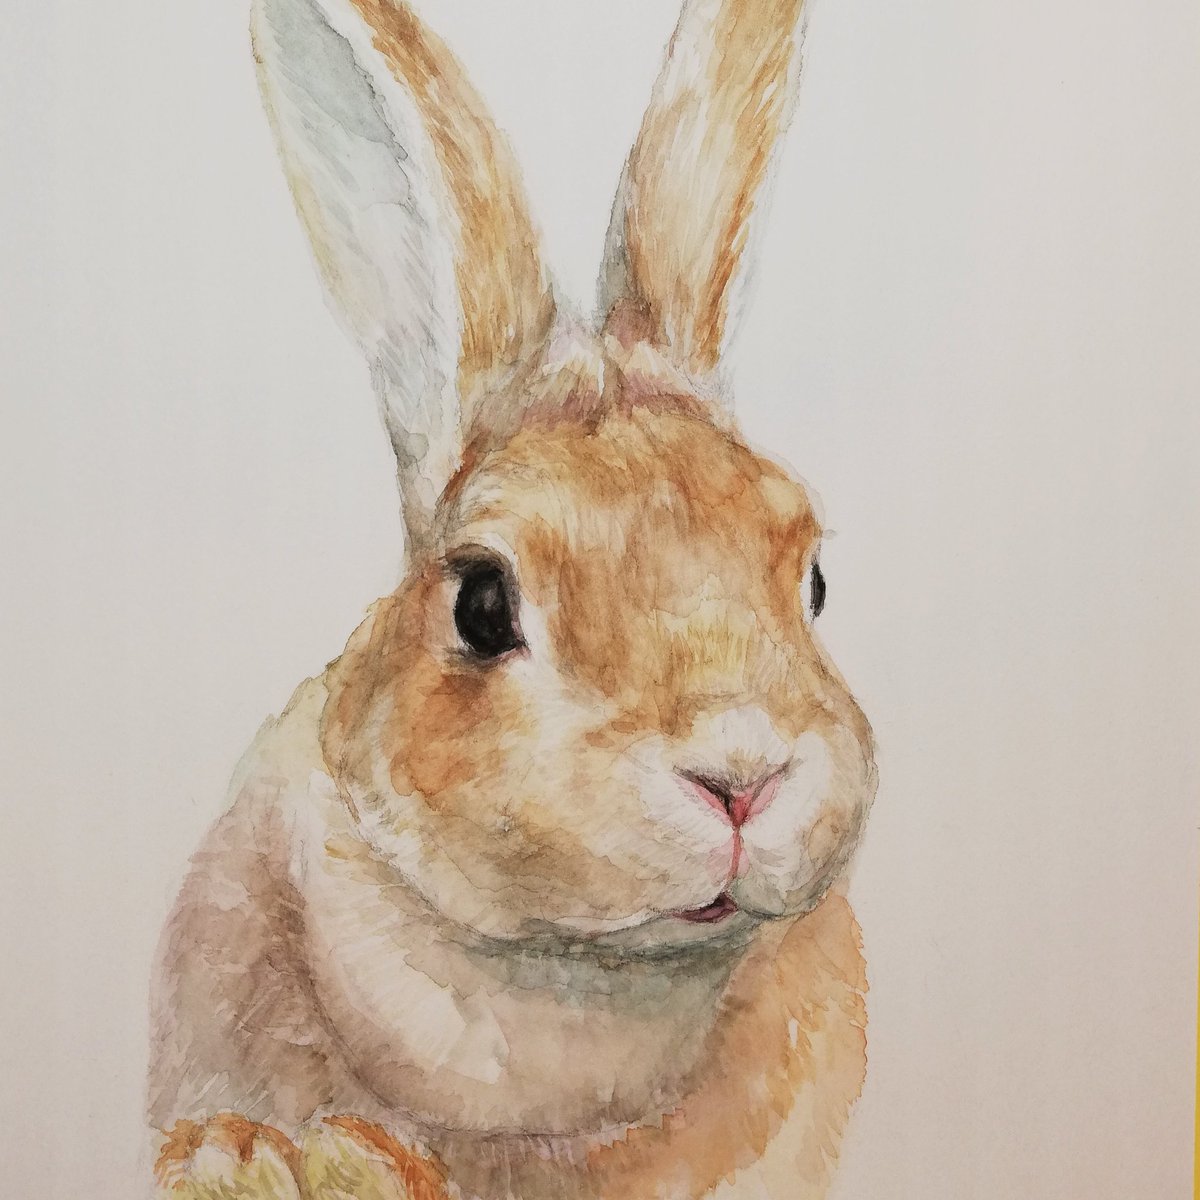 Fululu V Twitter ポートレート風 うさぎさんの水彩画 うさぎ 水彩画 Watercolor Bunny